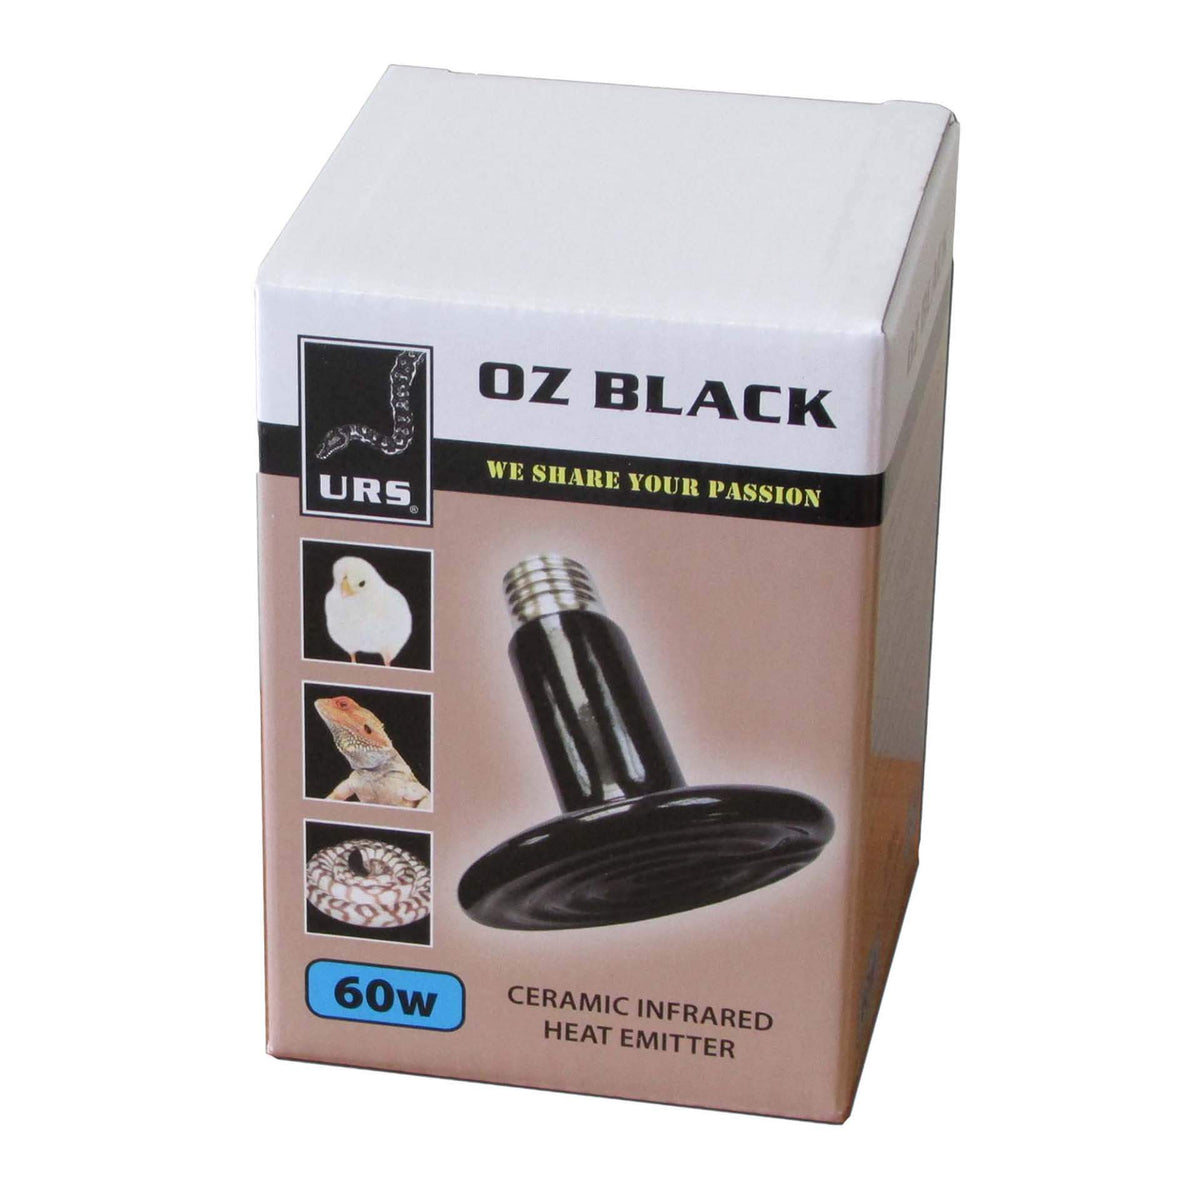 URS Oz Black Ceramic 60w